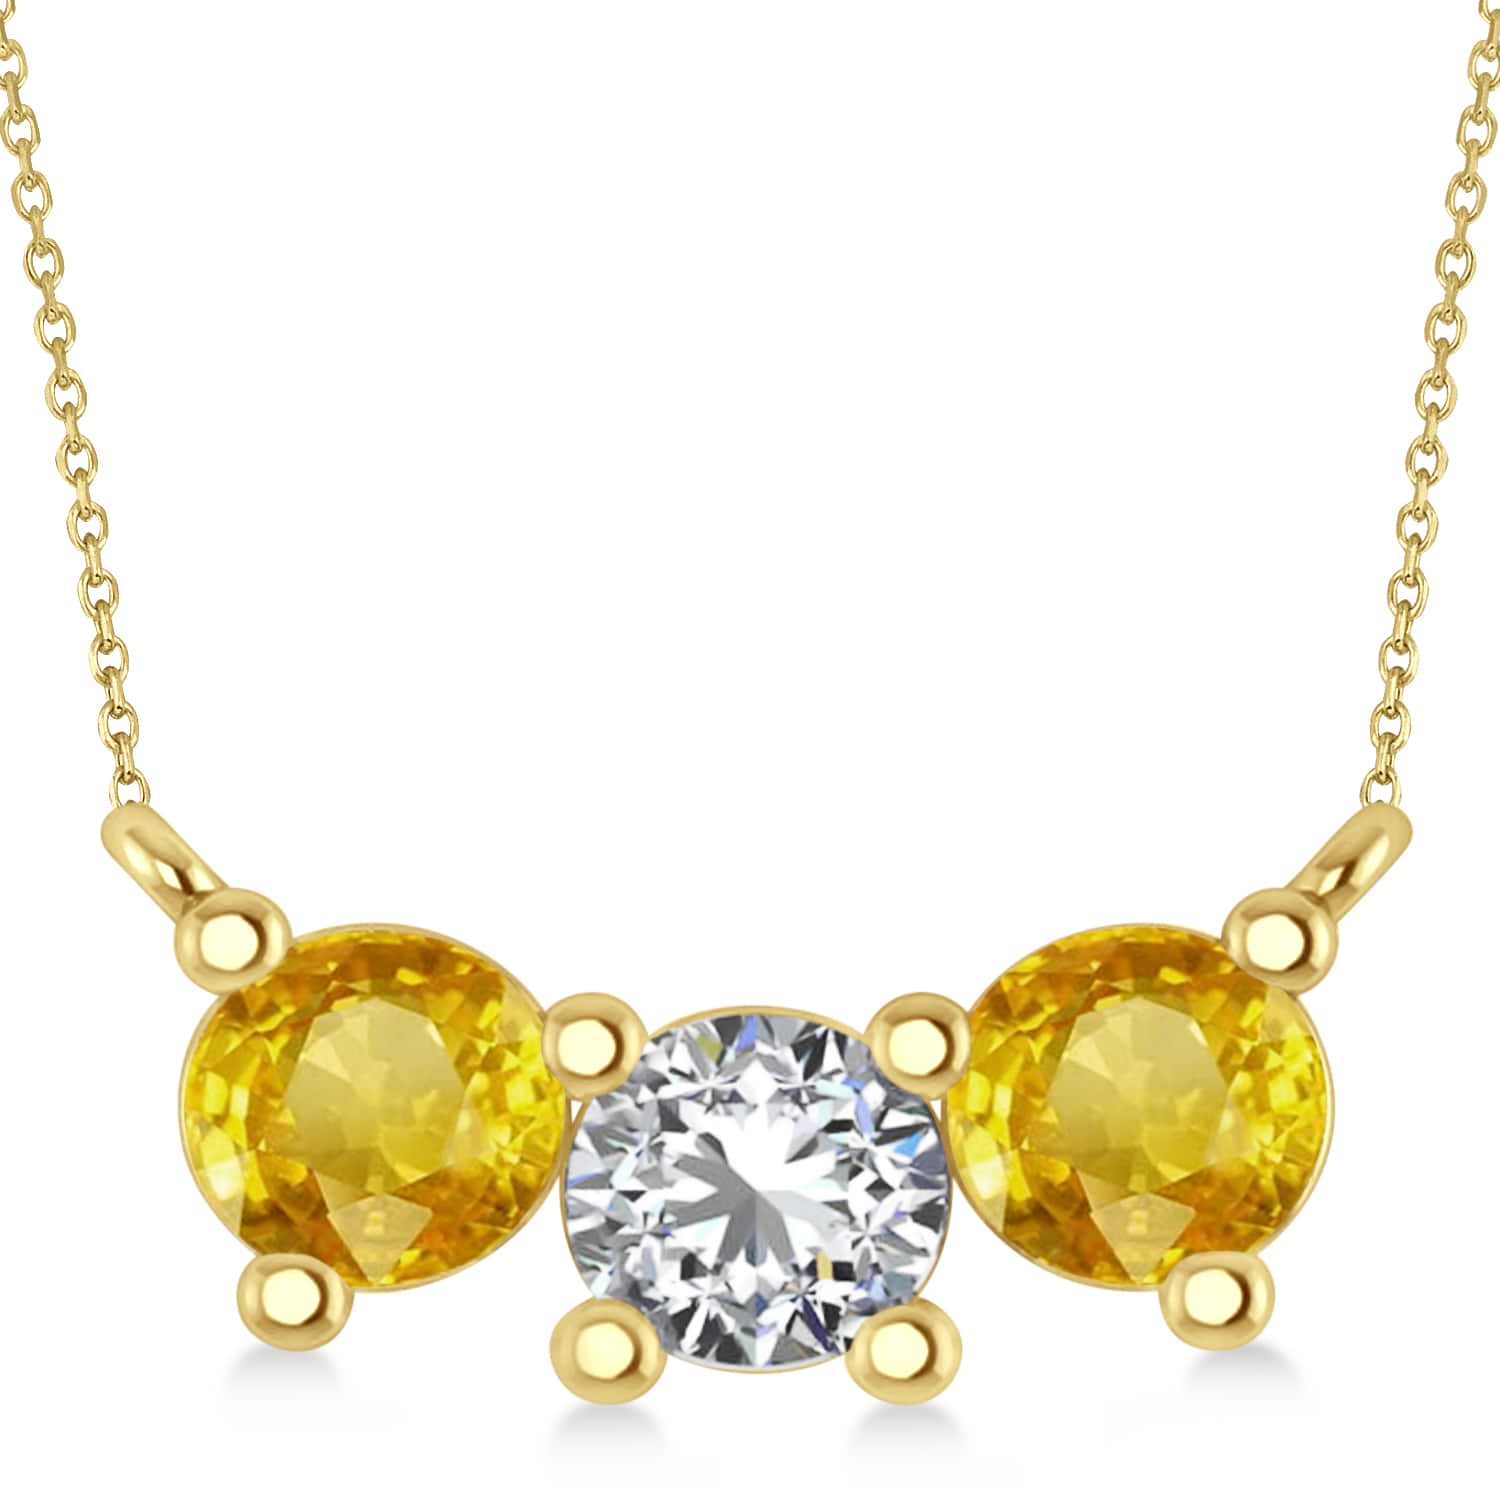 Three Stone Diamond & Yellow Sapphire Pendant Necklace 14k Yellow Gold (1.50ct)